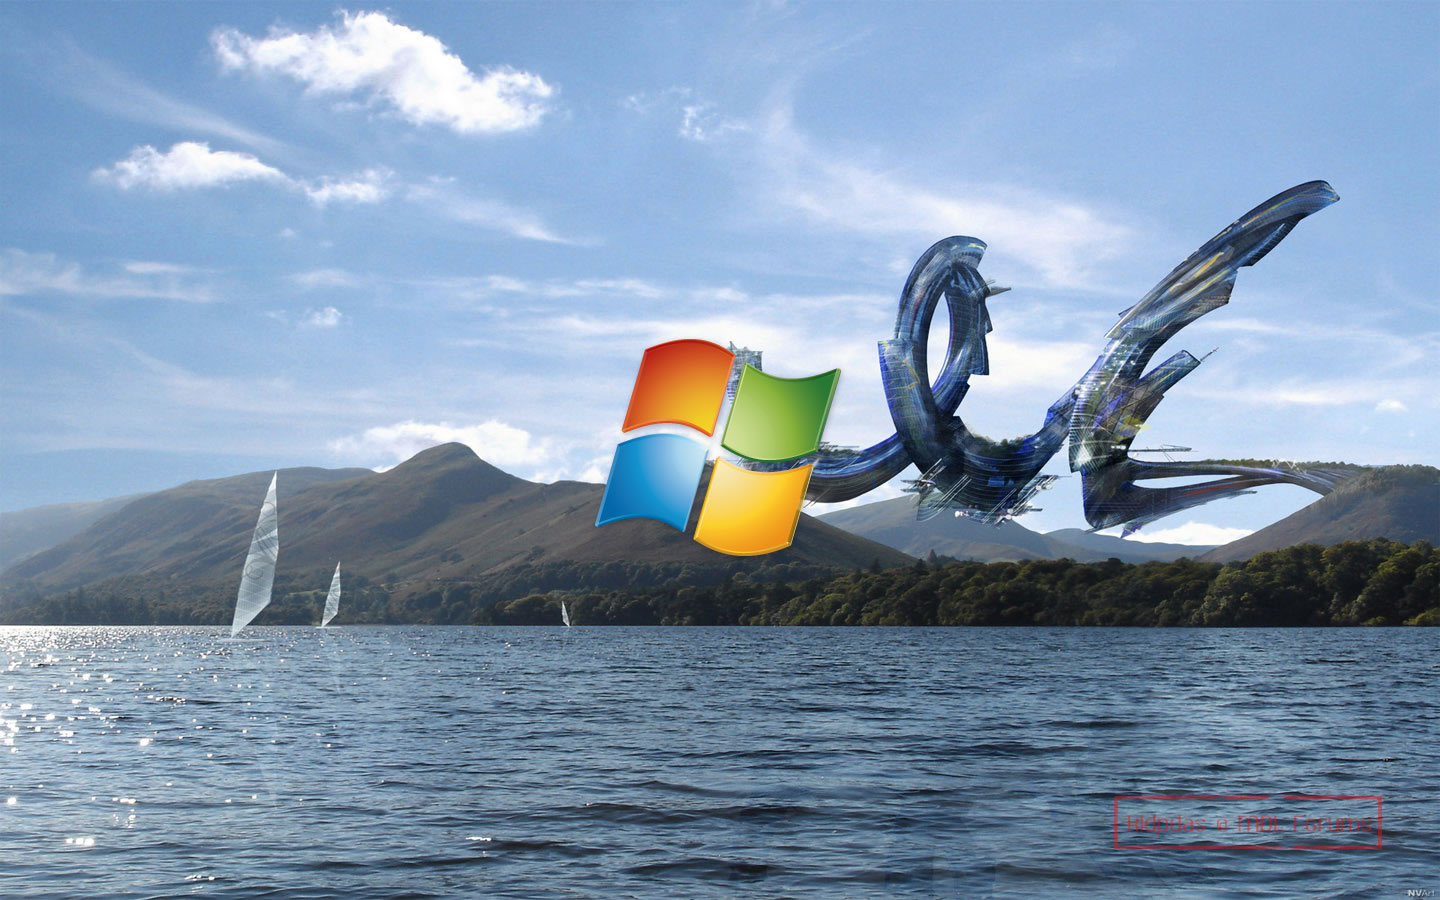 Windows 8 Wallpaper Hd Free Download